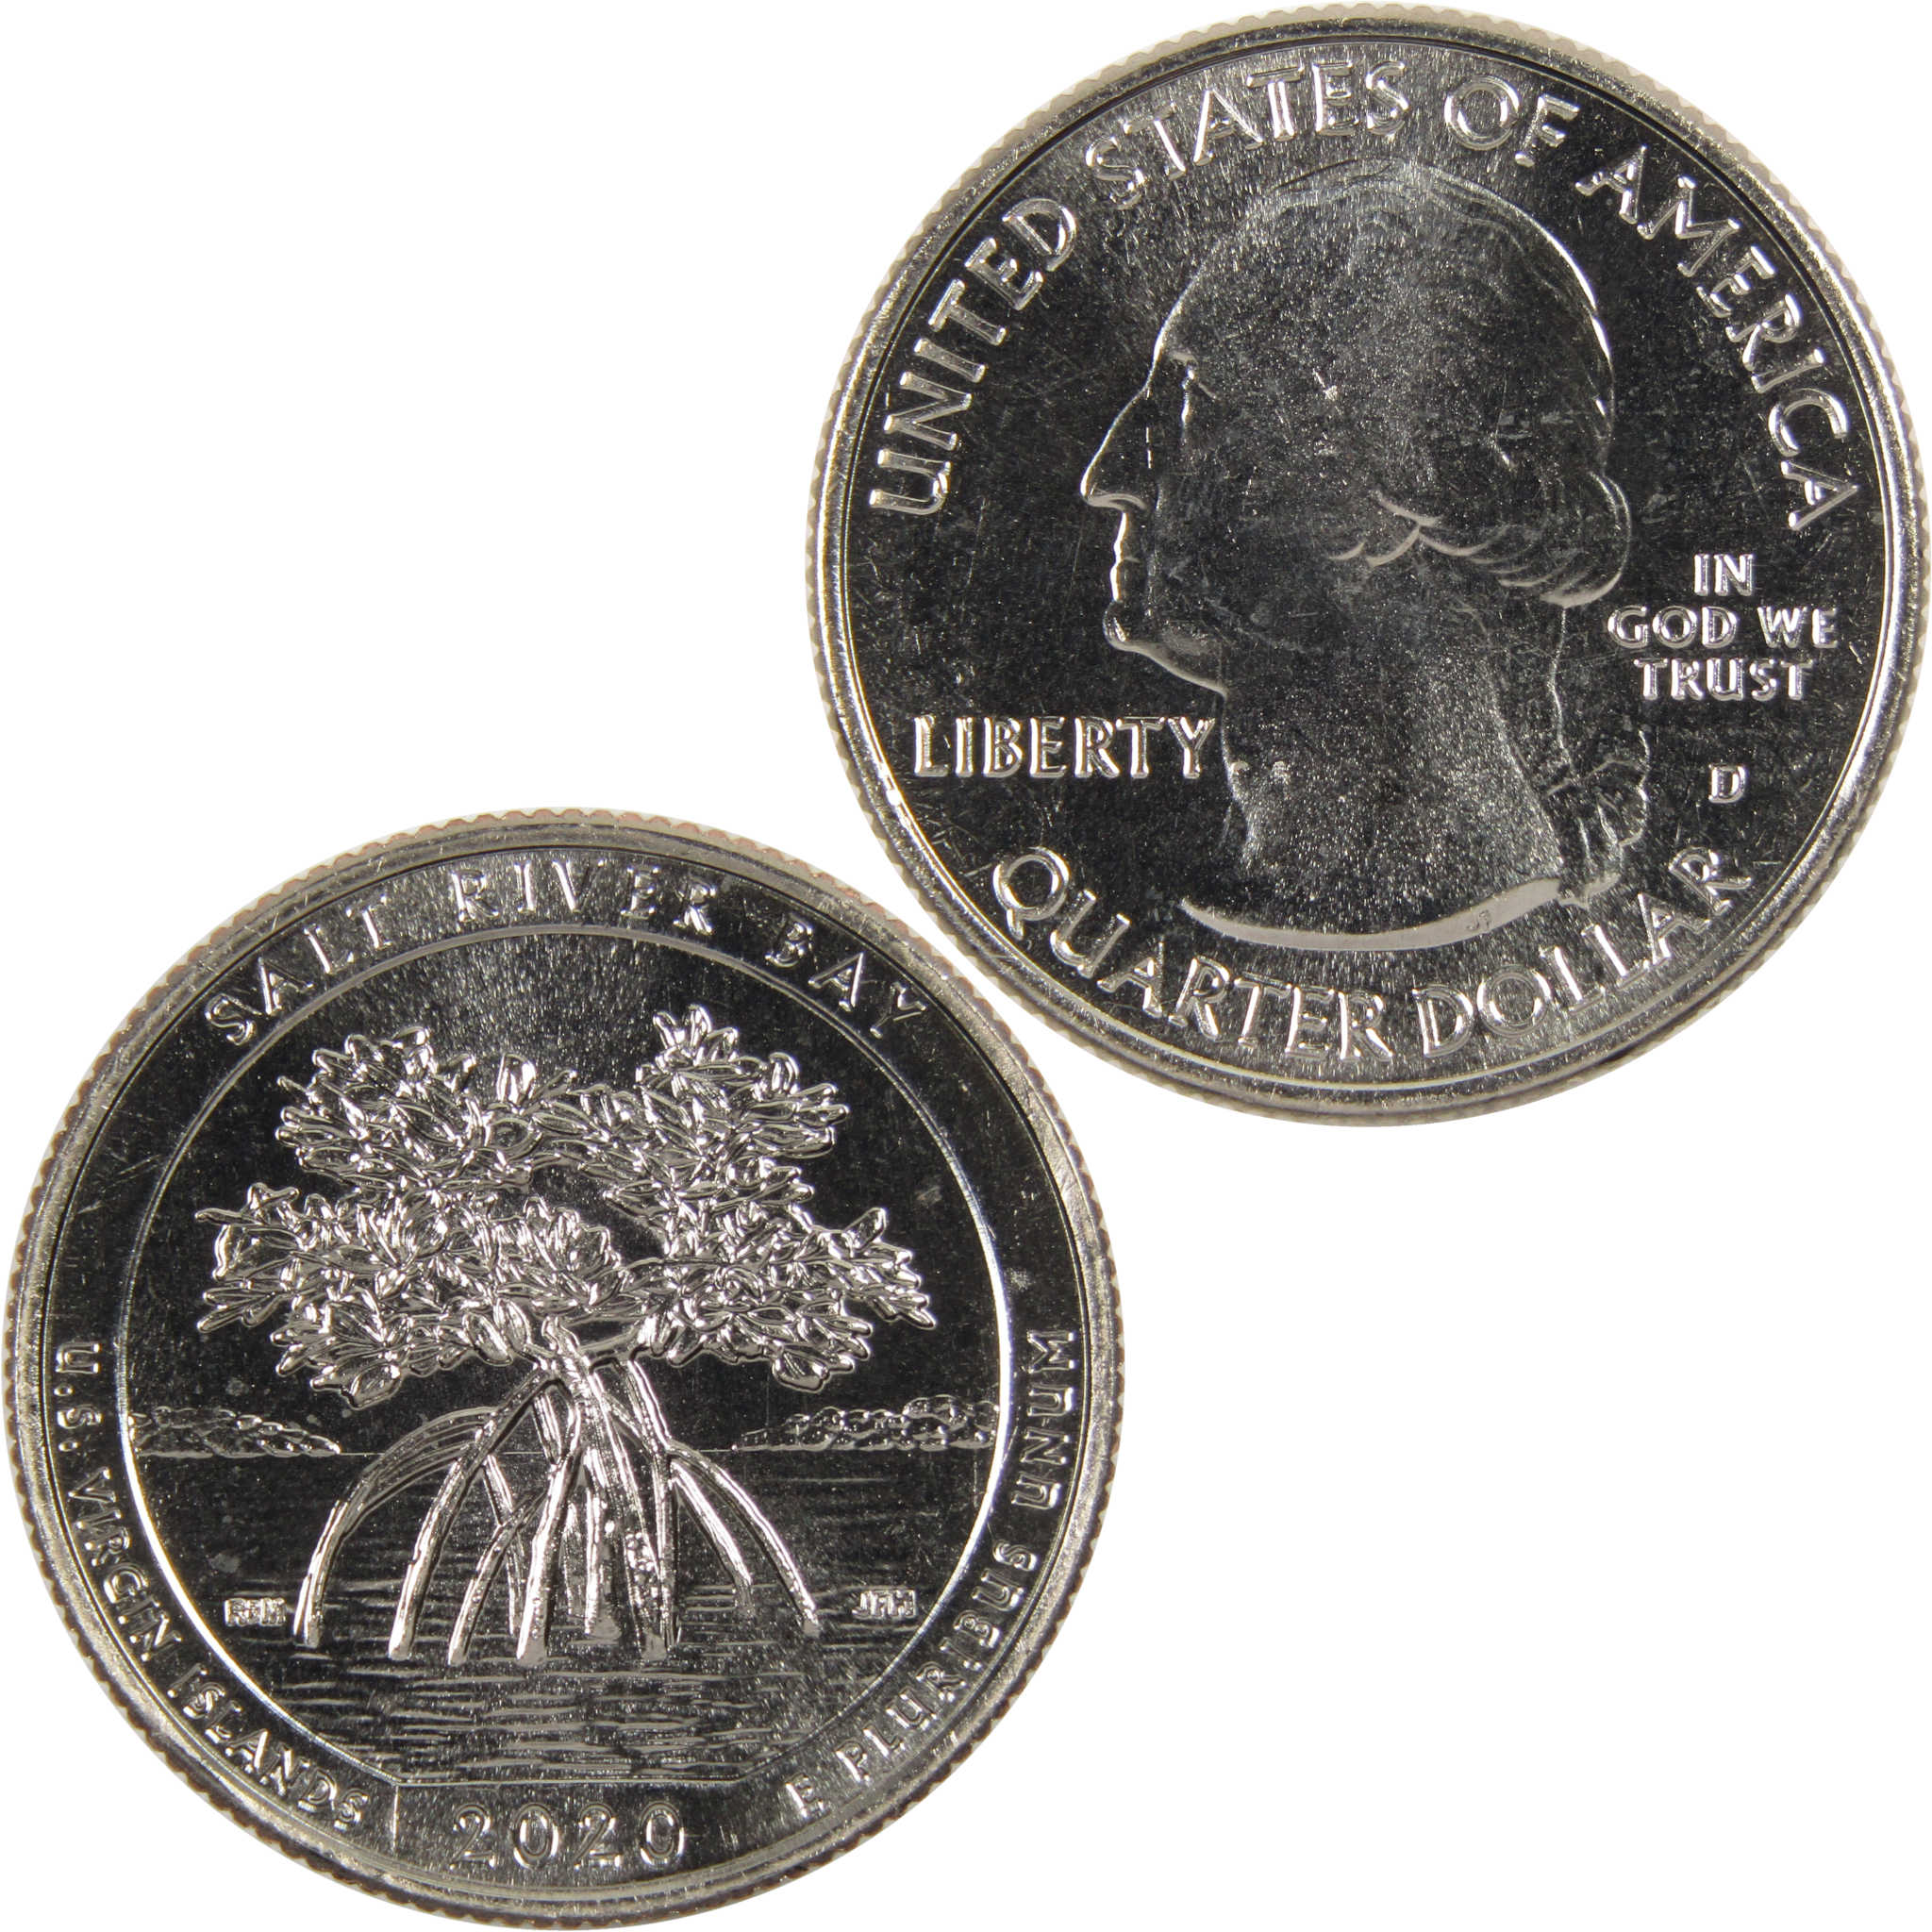 2020 D Salt River Bay National Park Quarter BU Uncirculated Clad Coin